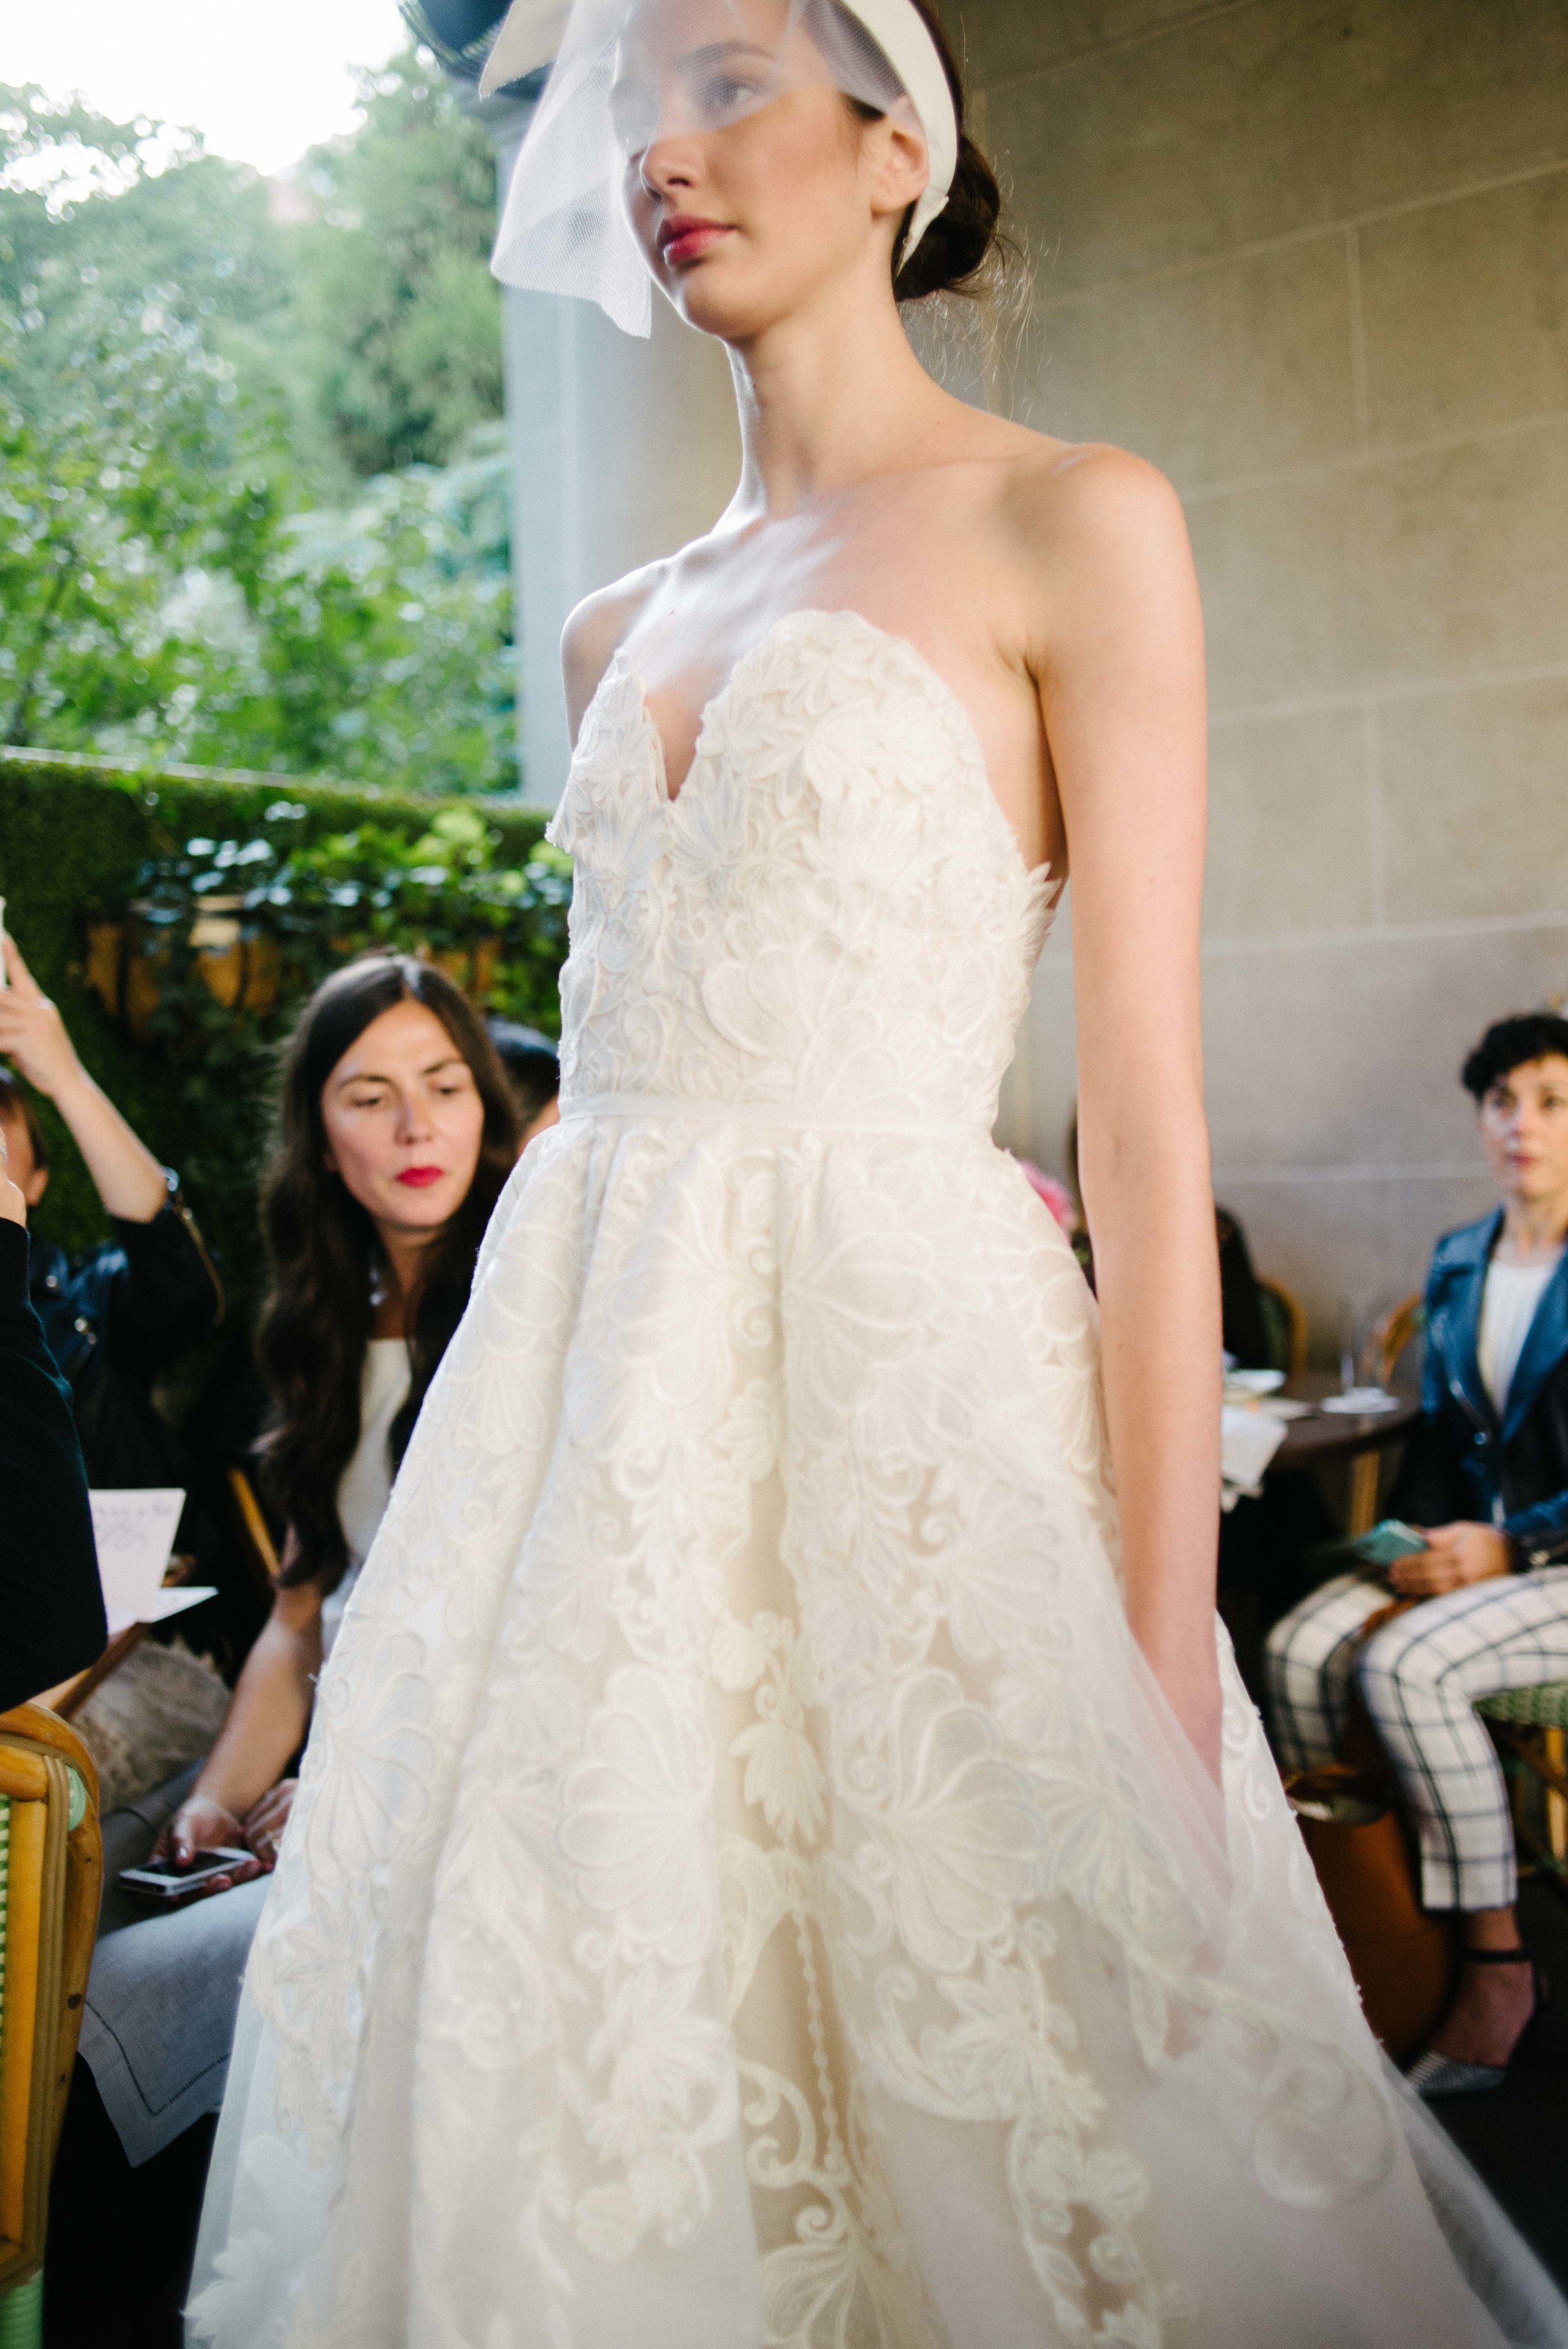  New York Bridal Fashion Week 2016 | Lela Rose Fall 2017 collection | Little White Dress Bridal Shop in Denver 